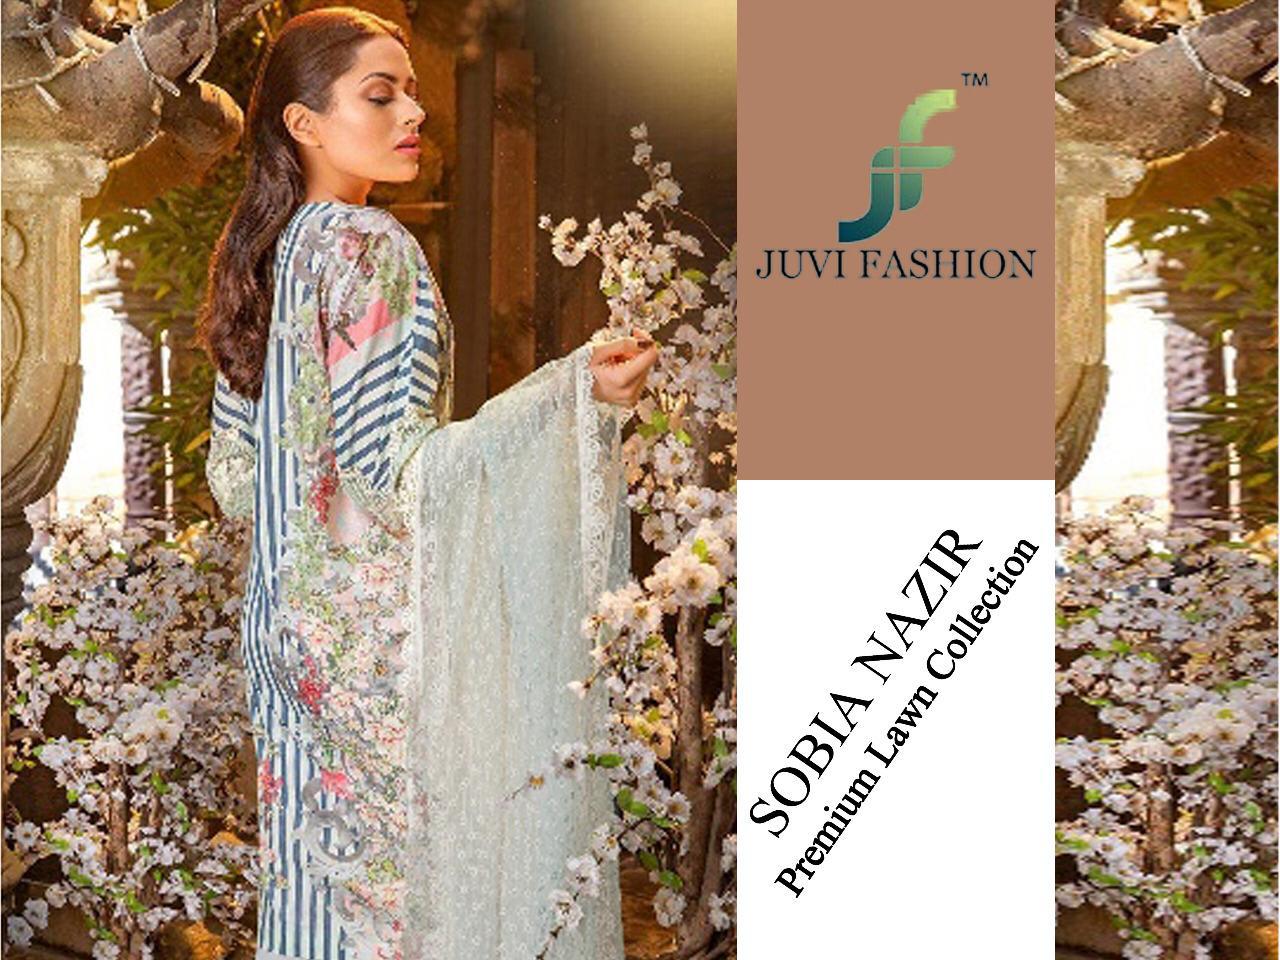 JUVI fashion presenting sOBIA NAZIR premium lawn collection beautifulsalwar kameez concept